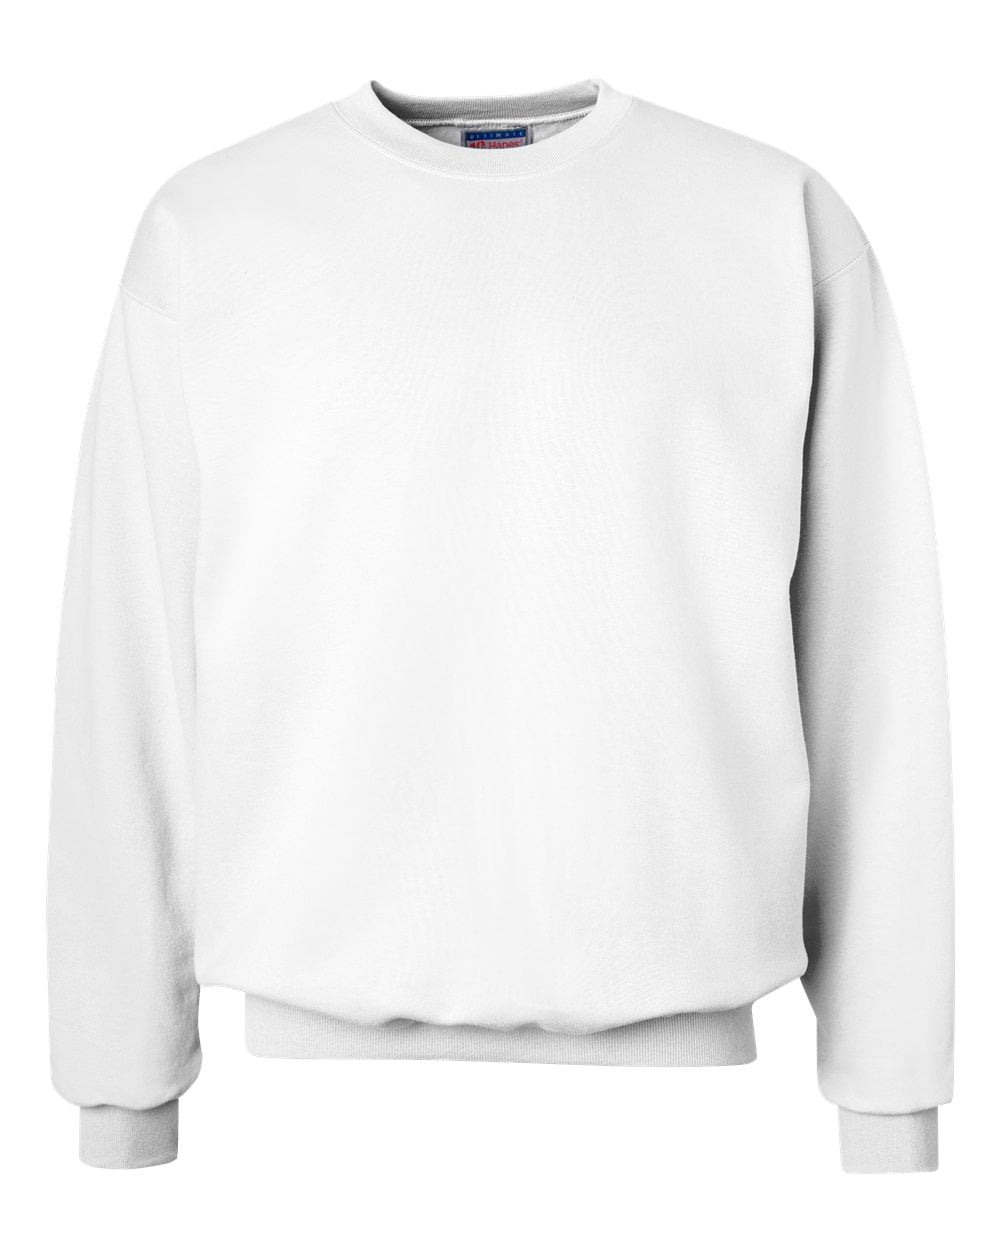 Adidas sweatshirt discount 85% KIDS FASHION Jumpers & Sweatshirts Sequin Black 10Y 